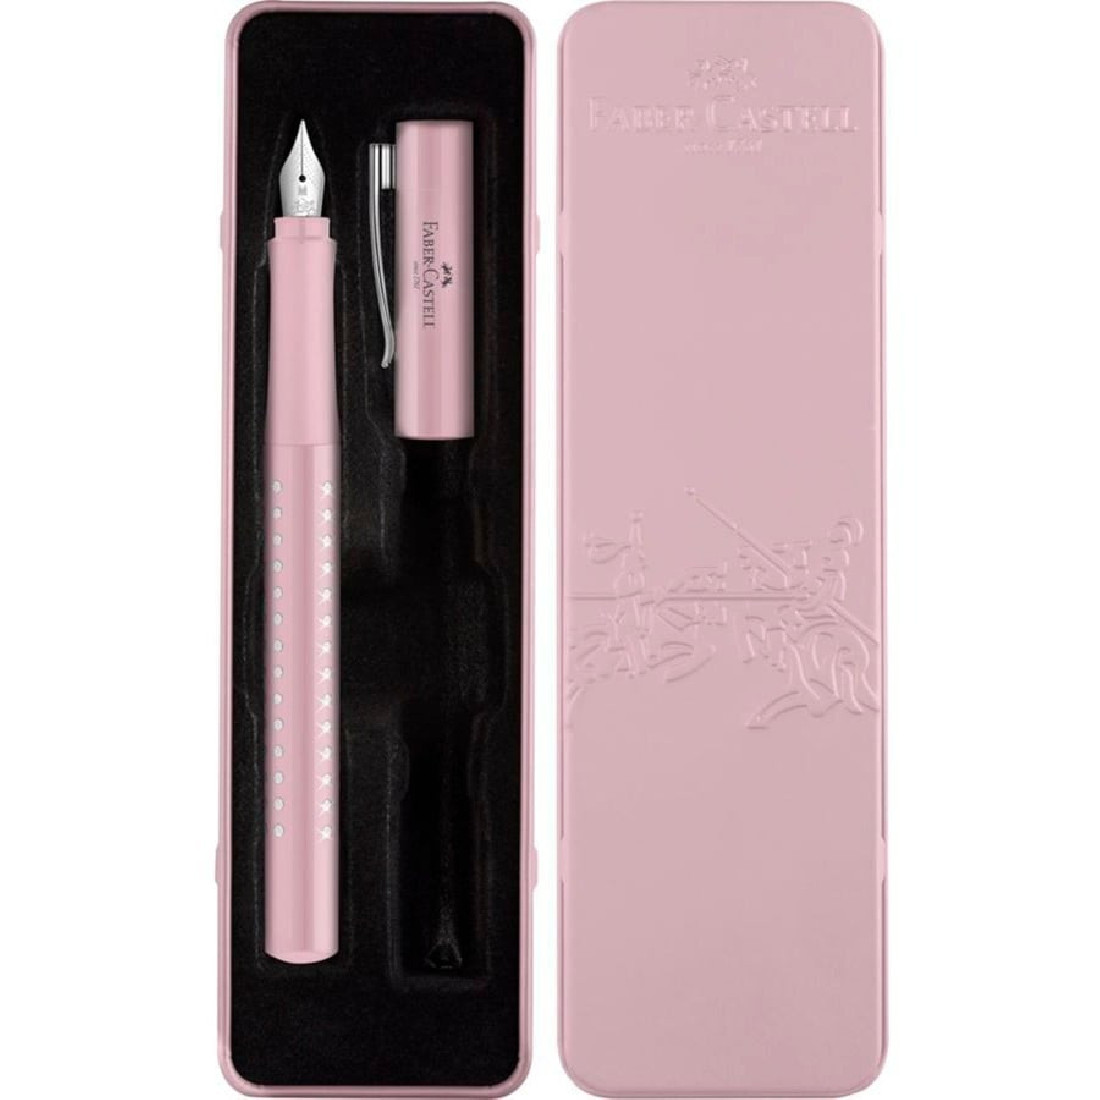 Faber-Castell Sparkle M Rose 201515 fountain pen